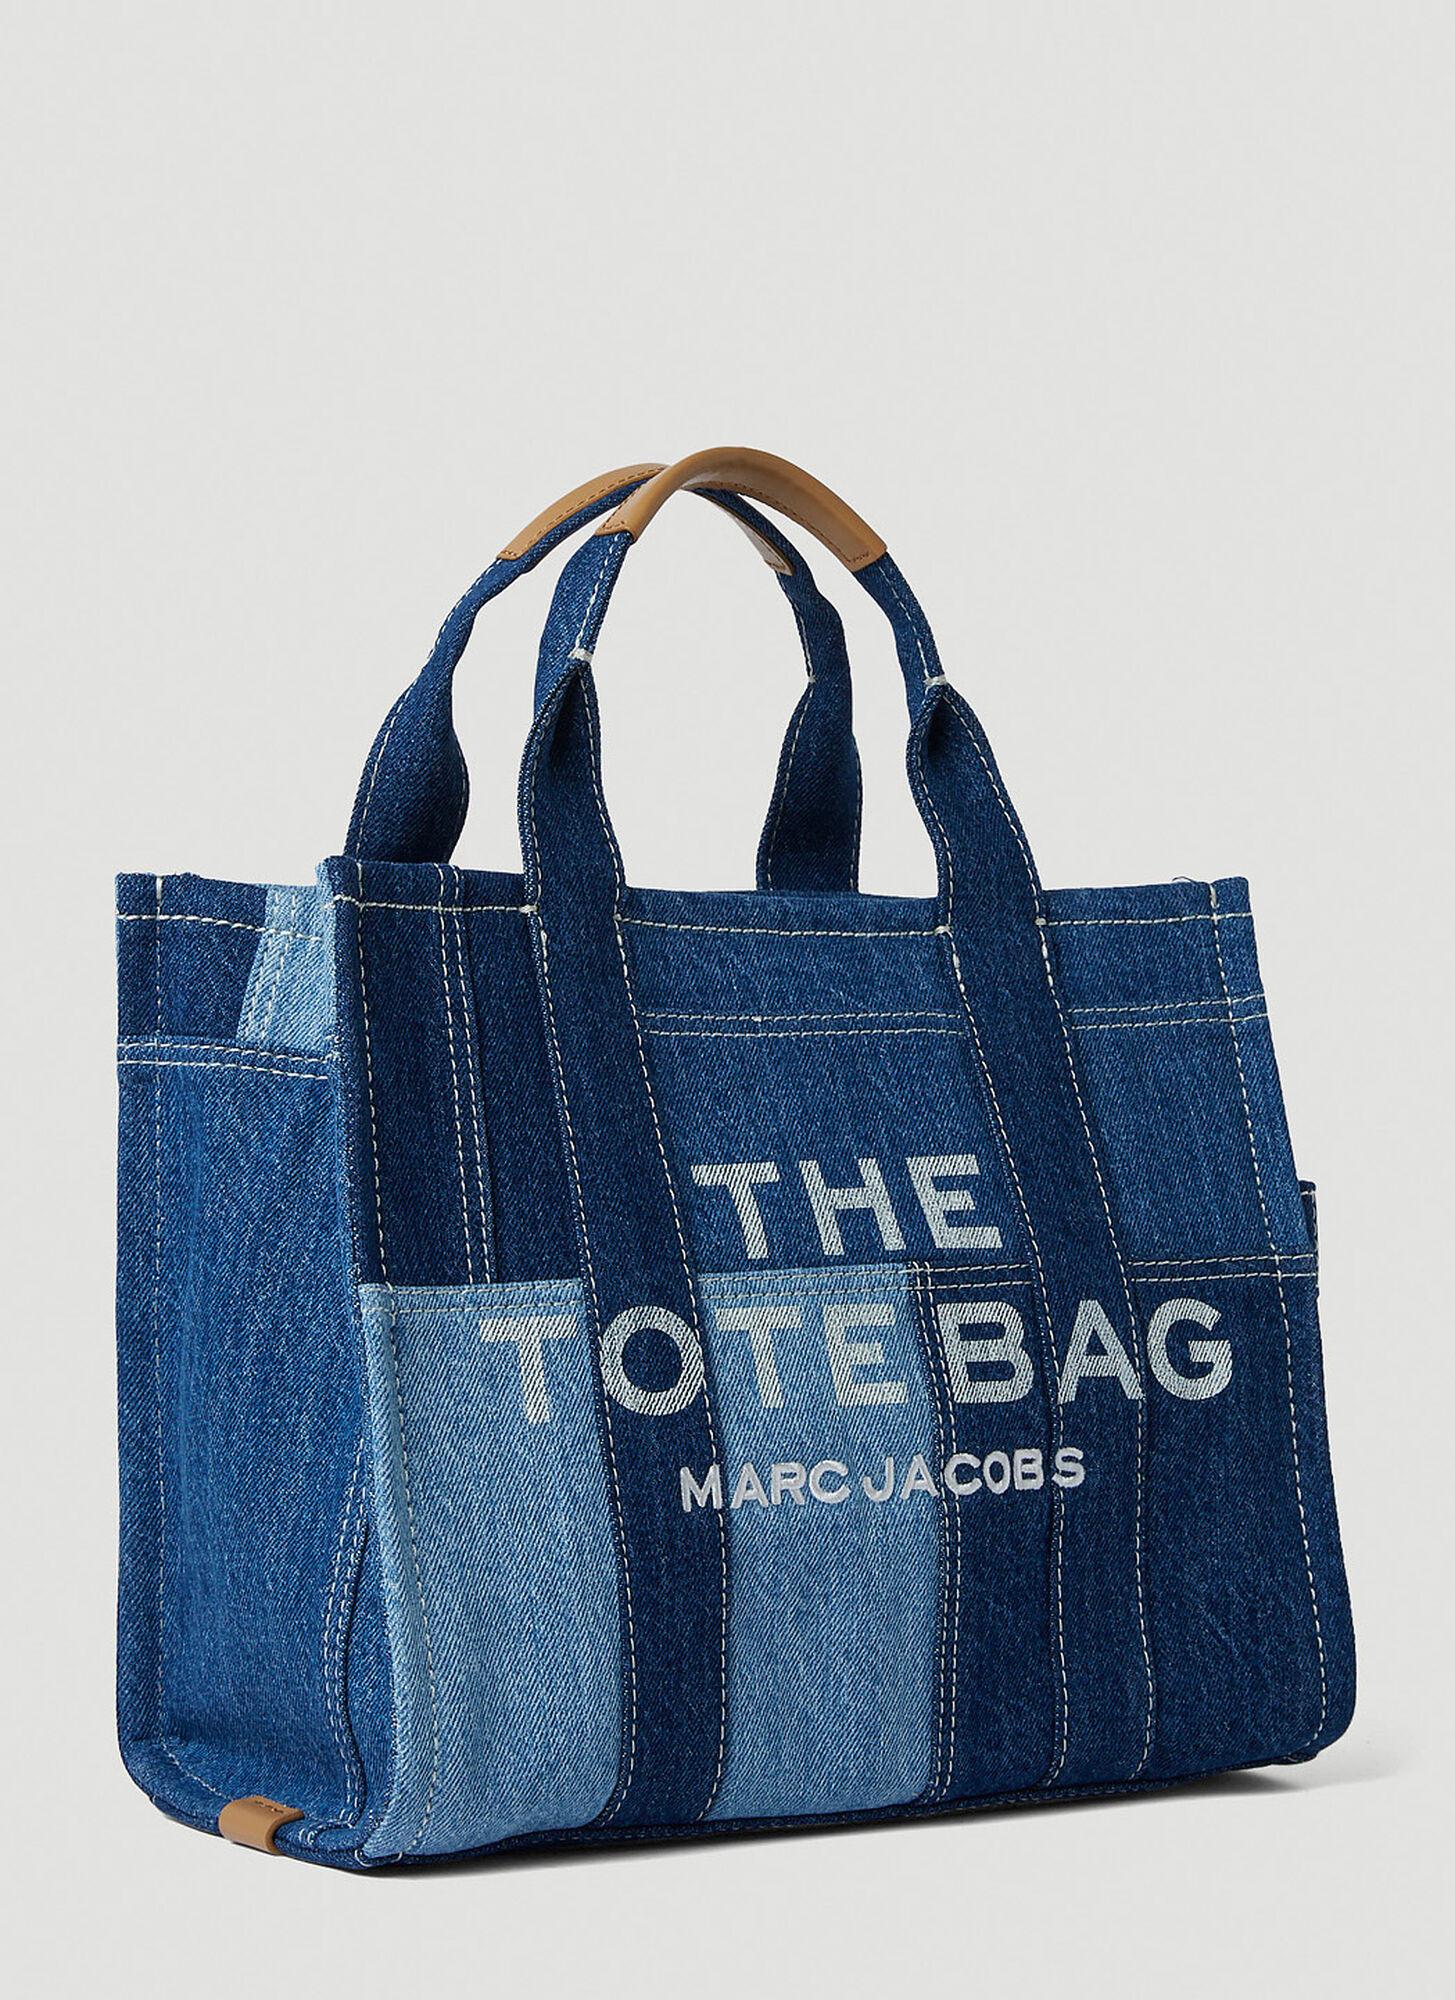 MARC JACOBS tote bag THE TERRY MINI Lettering logo 2WAY handbag